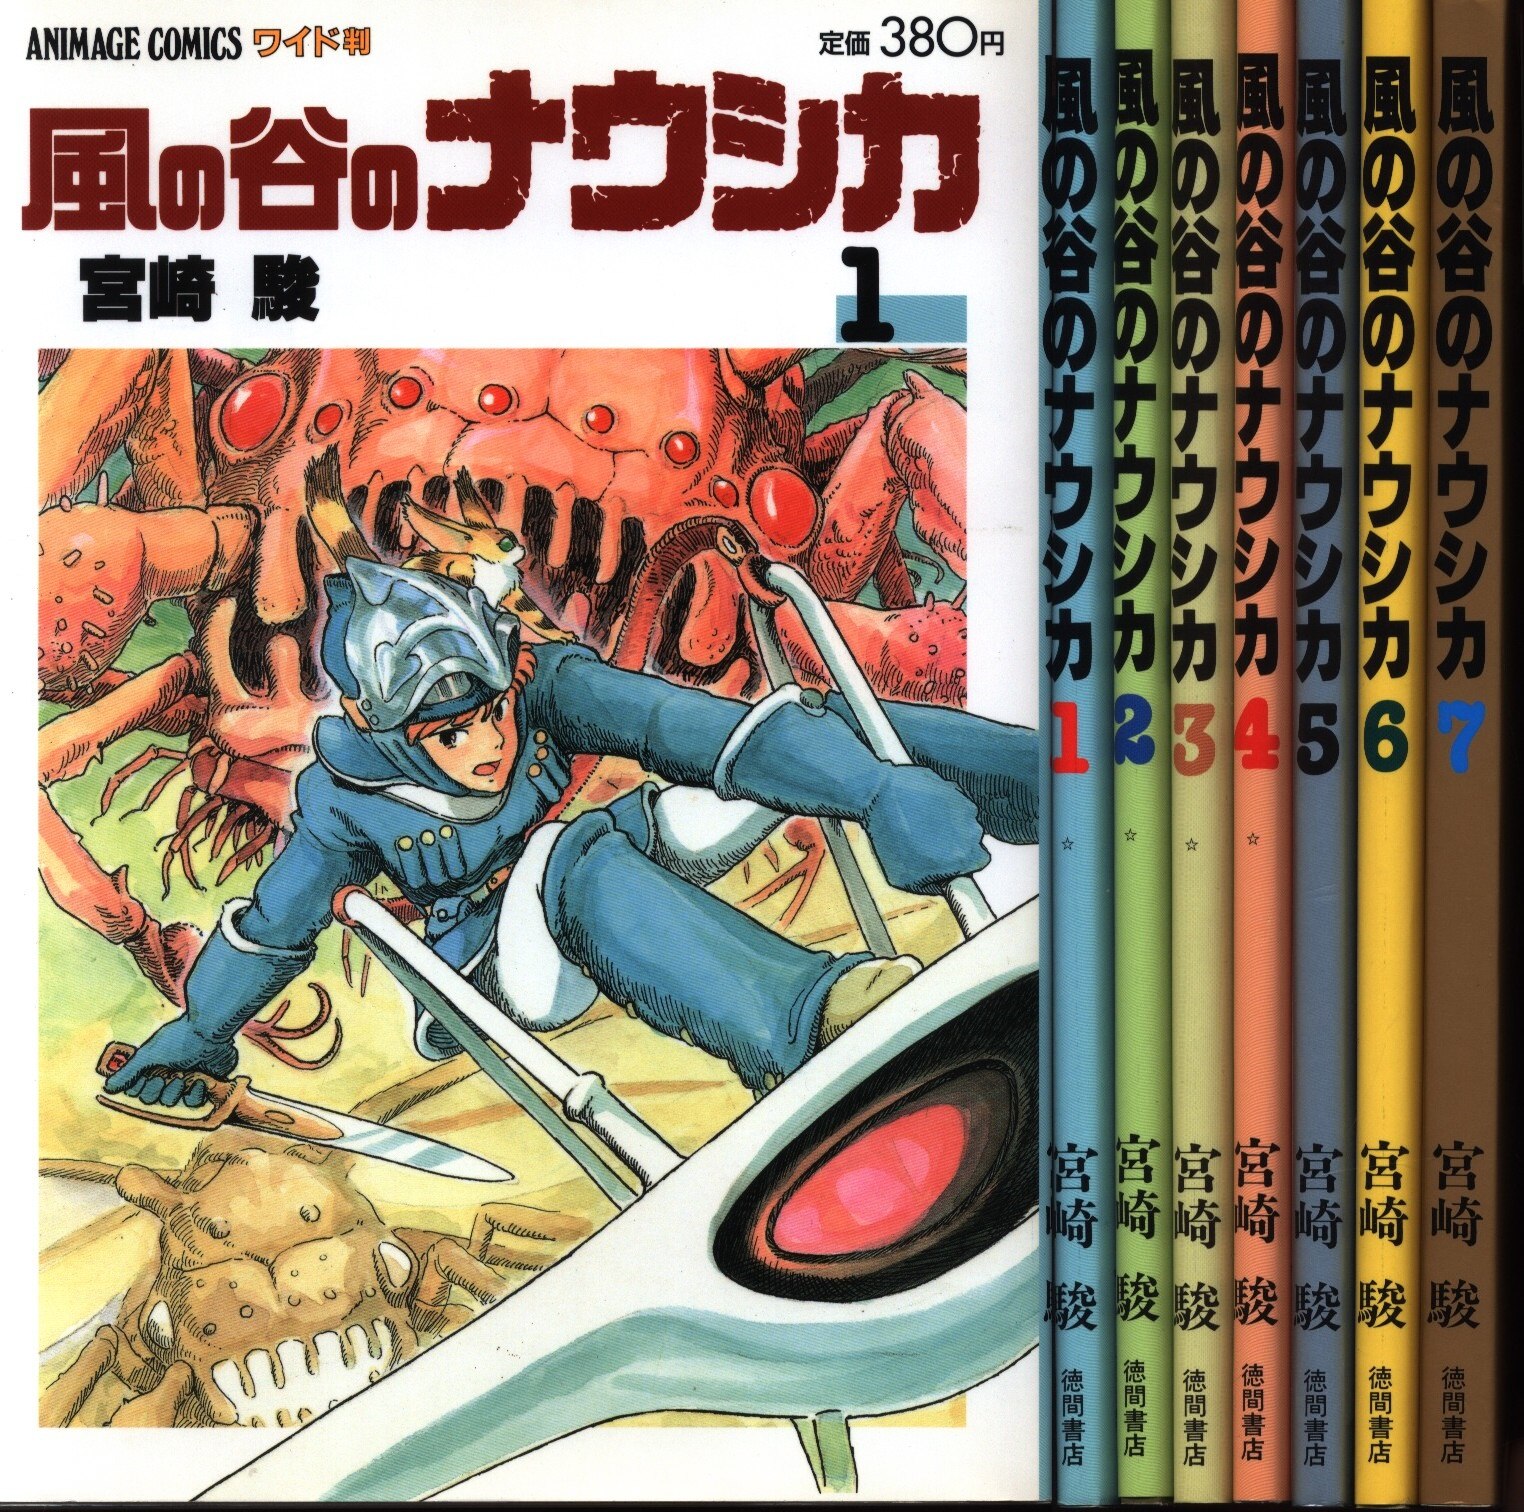 2K 風の谷のナウシカ全7巻セット ―アニメージュコミックスワイド判